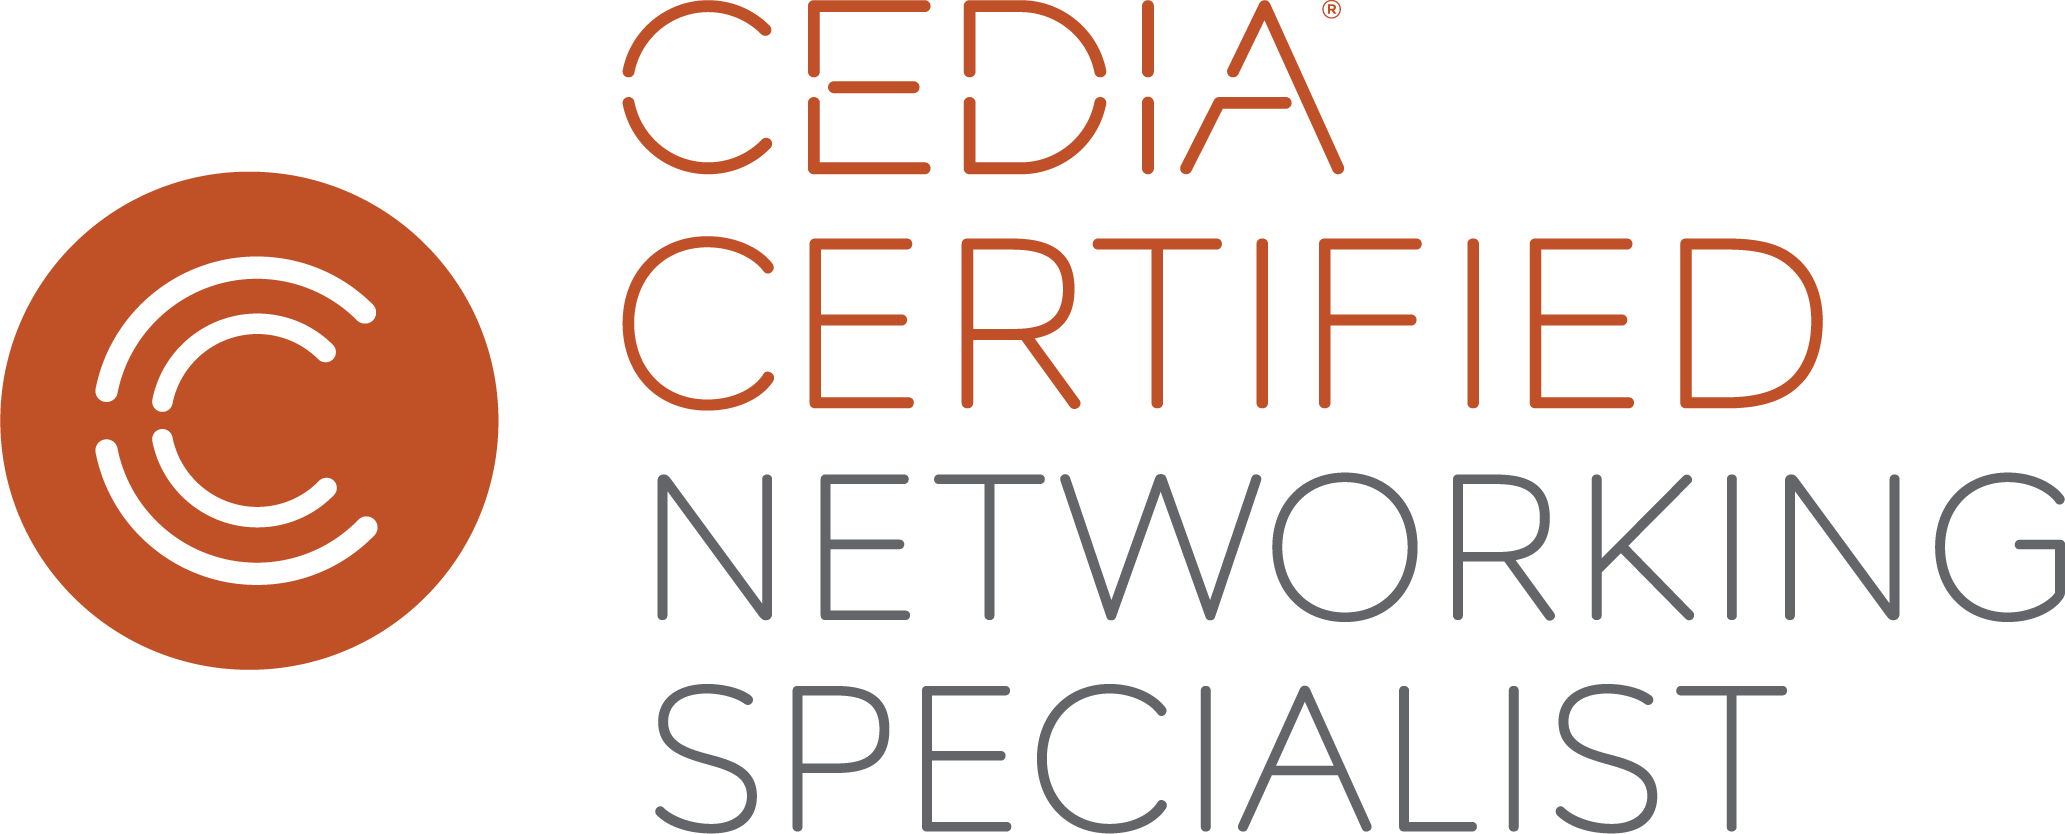 CEDIA Certified Networking Specialist